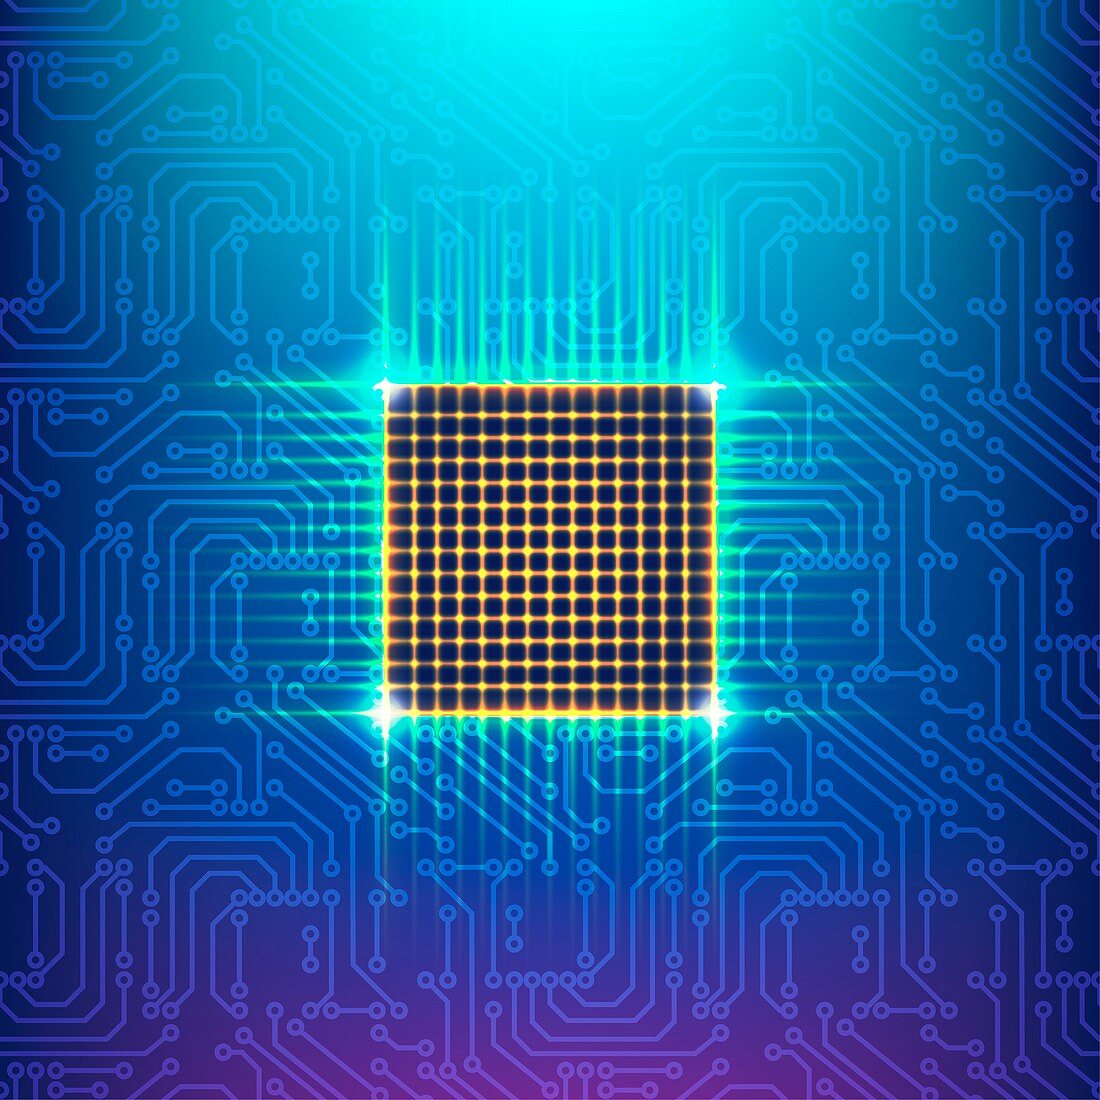 Computer chip, illustration